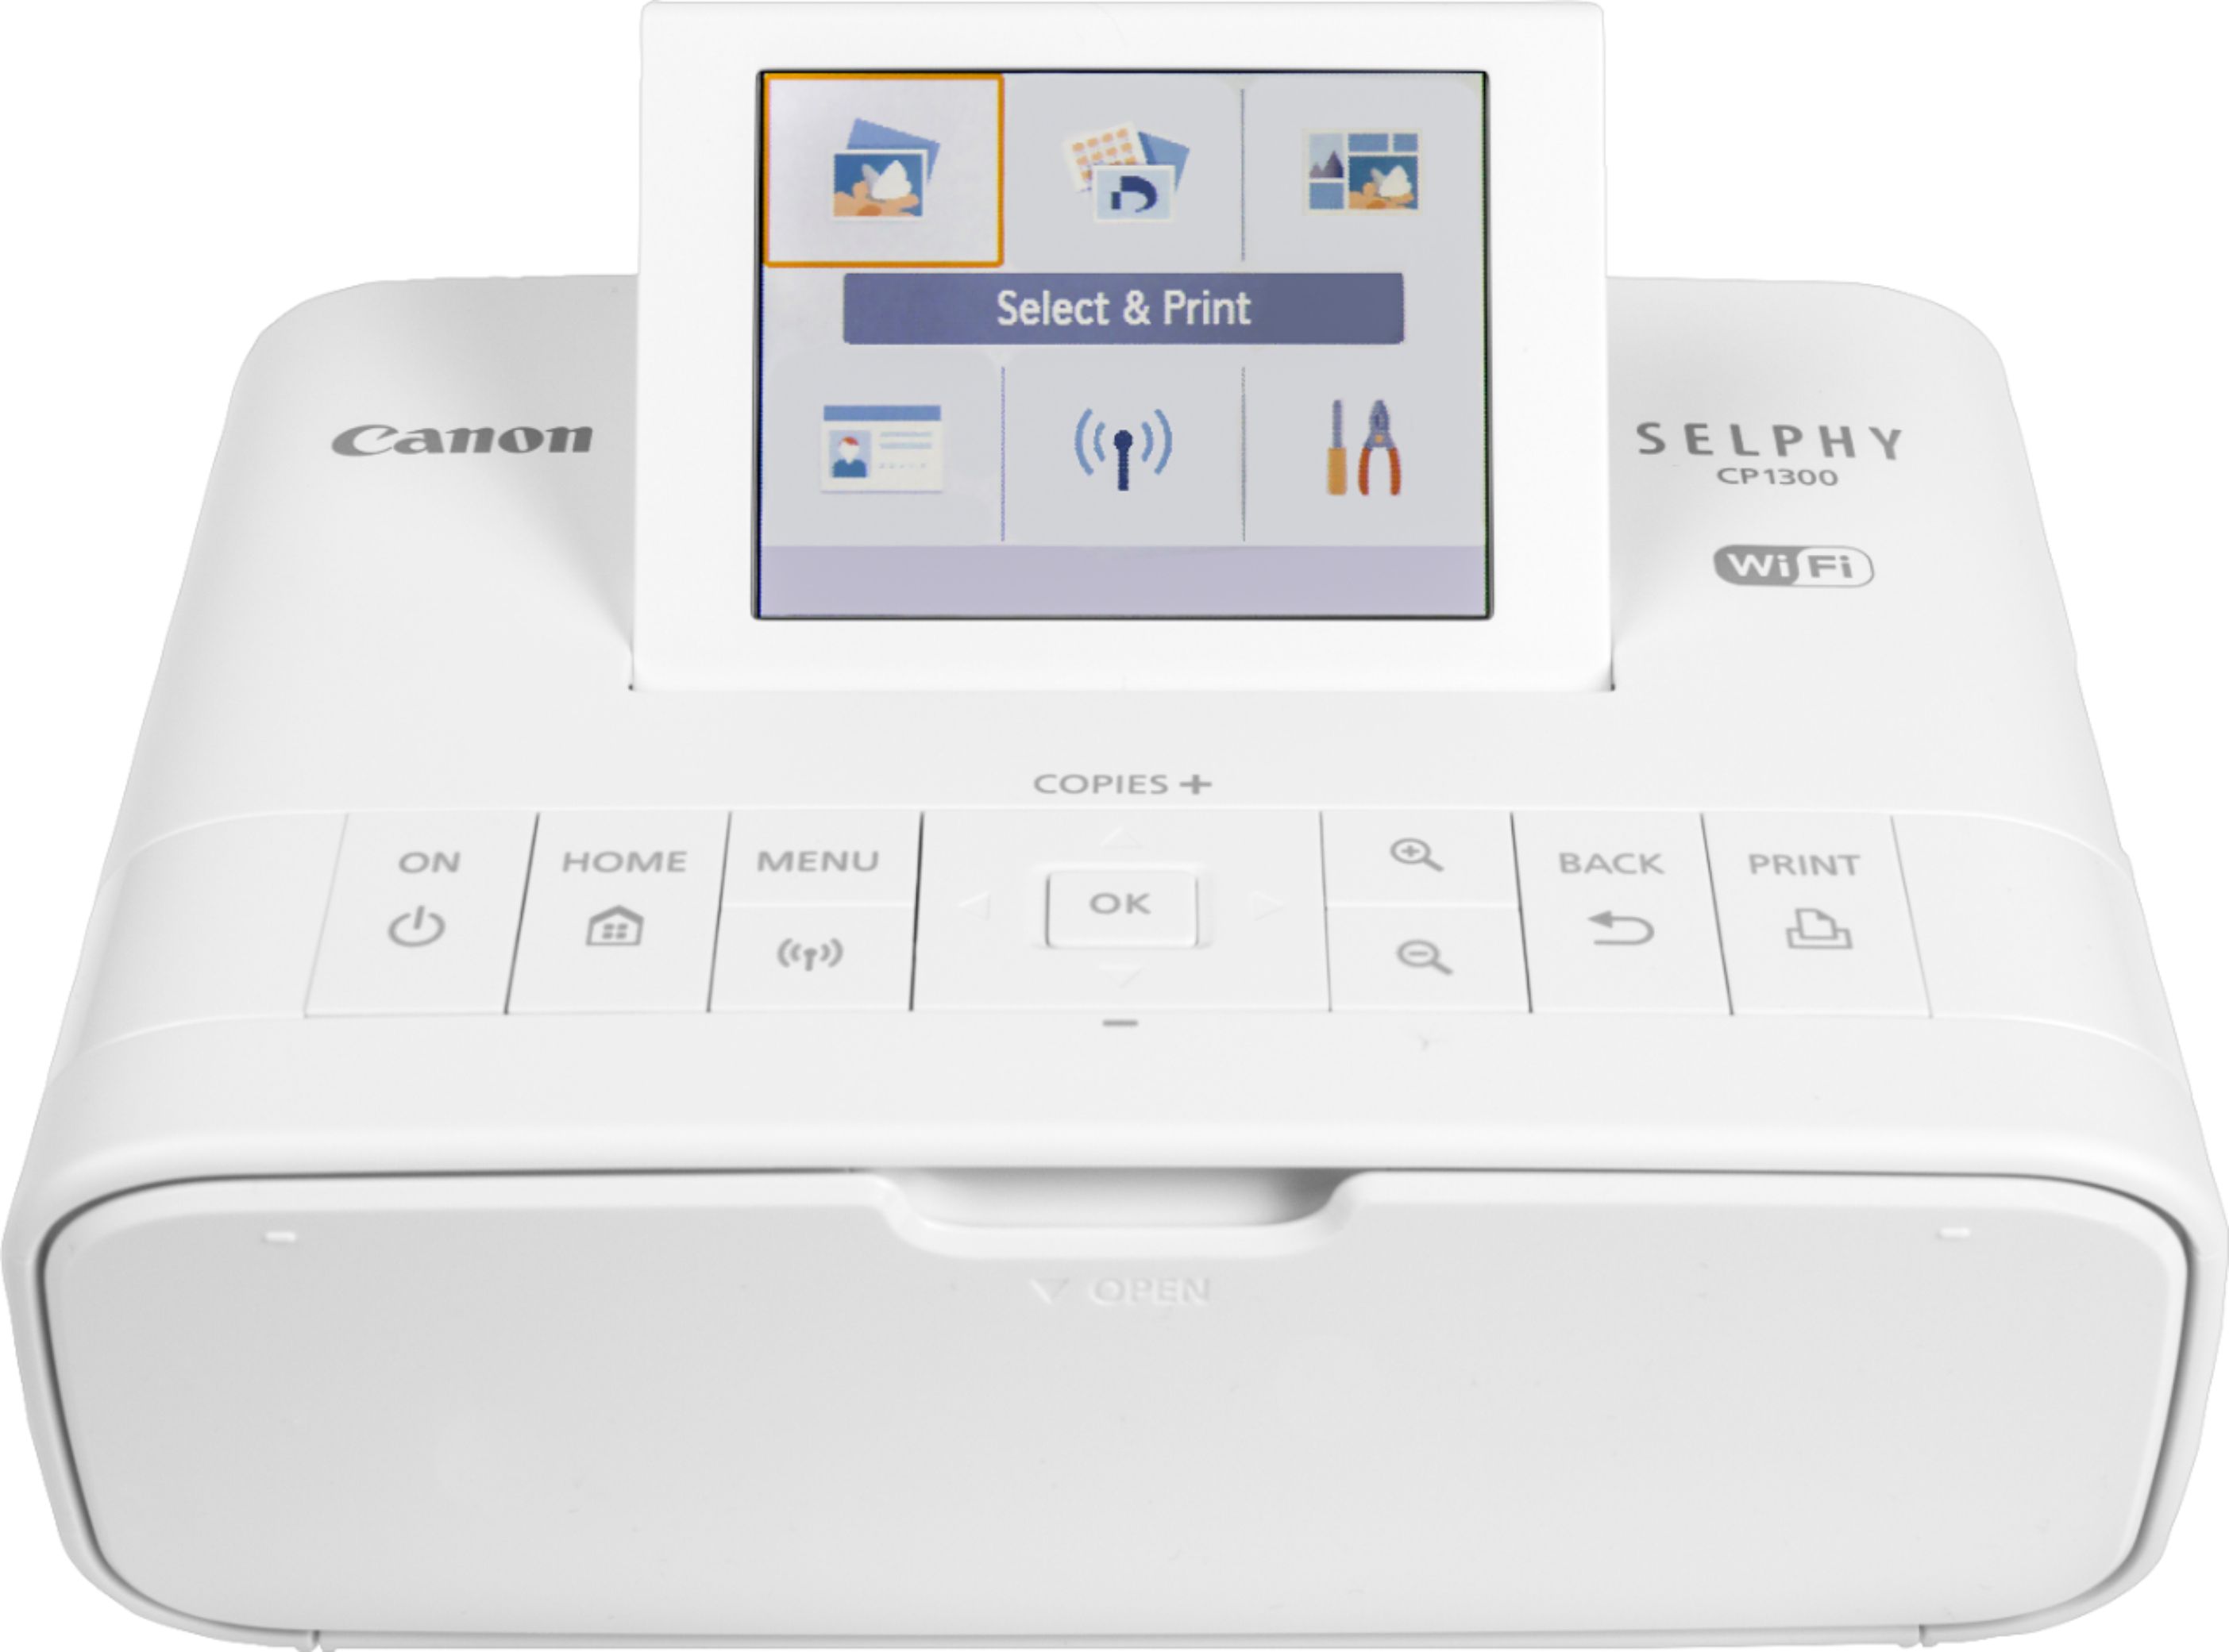 Canon SELPHY CP1300 Wireless Compact Photo Printer - Pink : Photo Printer, Tecobuy.COM US